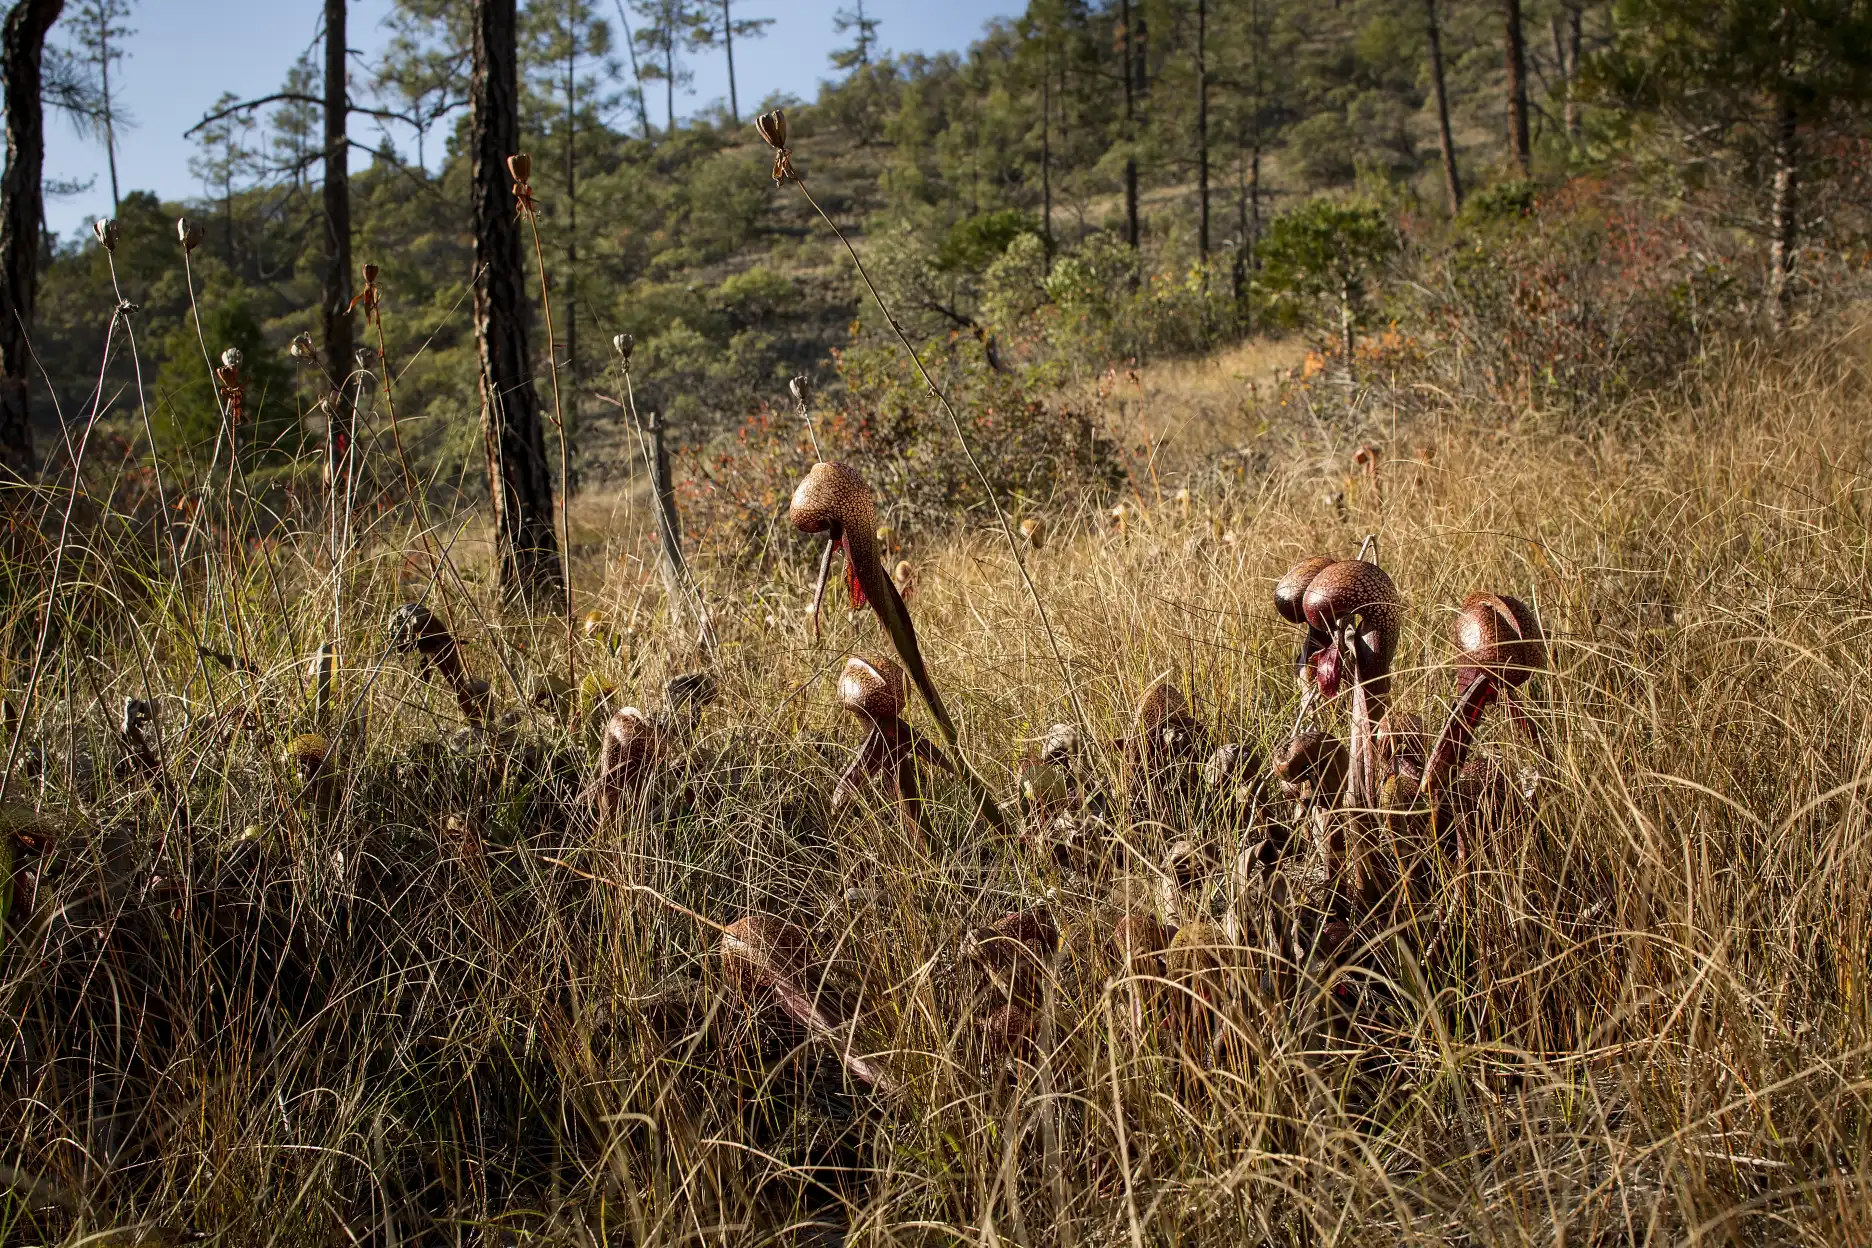 Darlingtonia grow amidst grasses at $8 Mountain